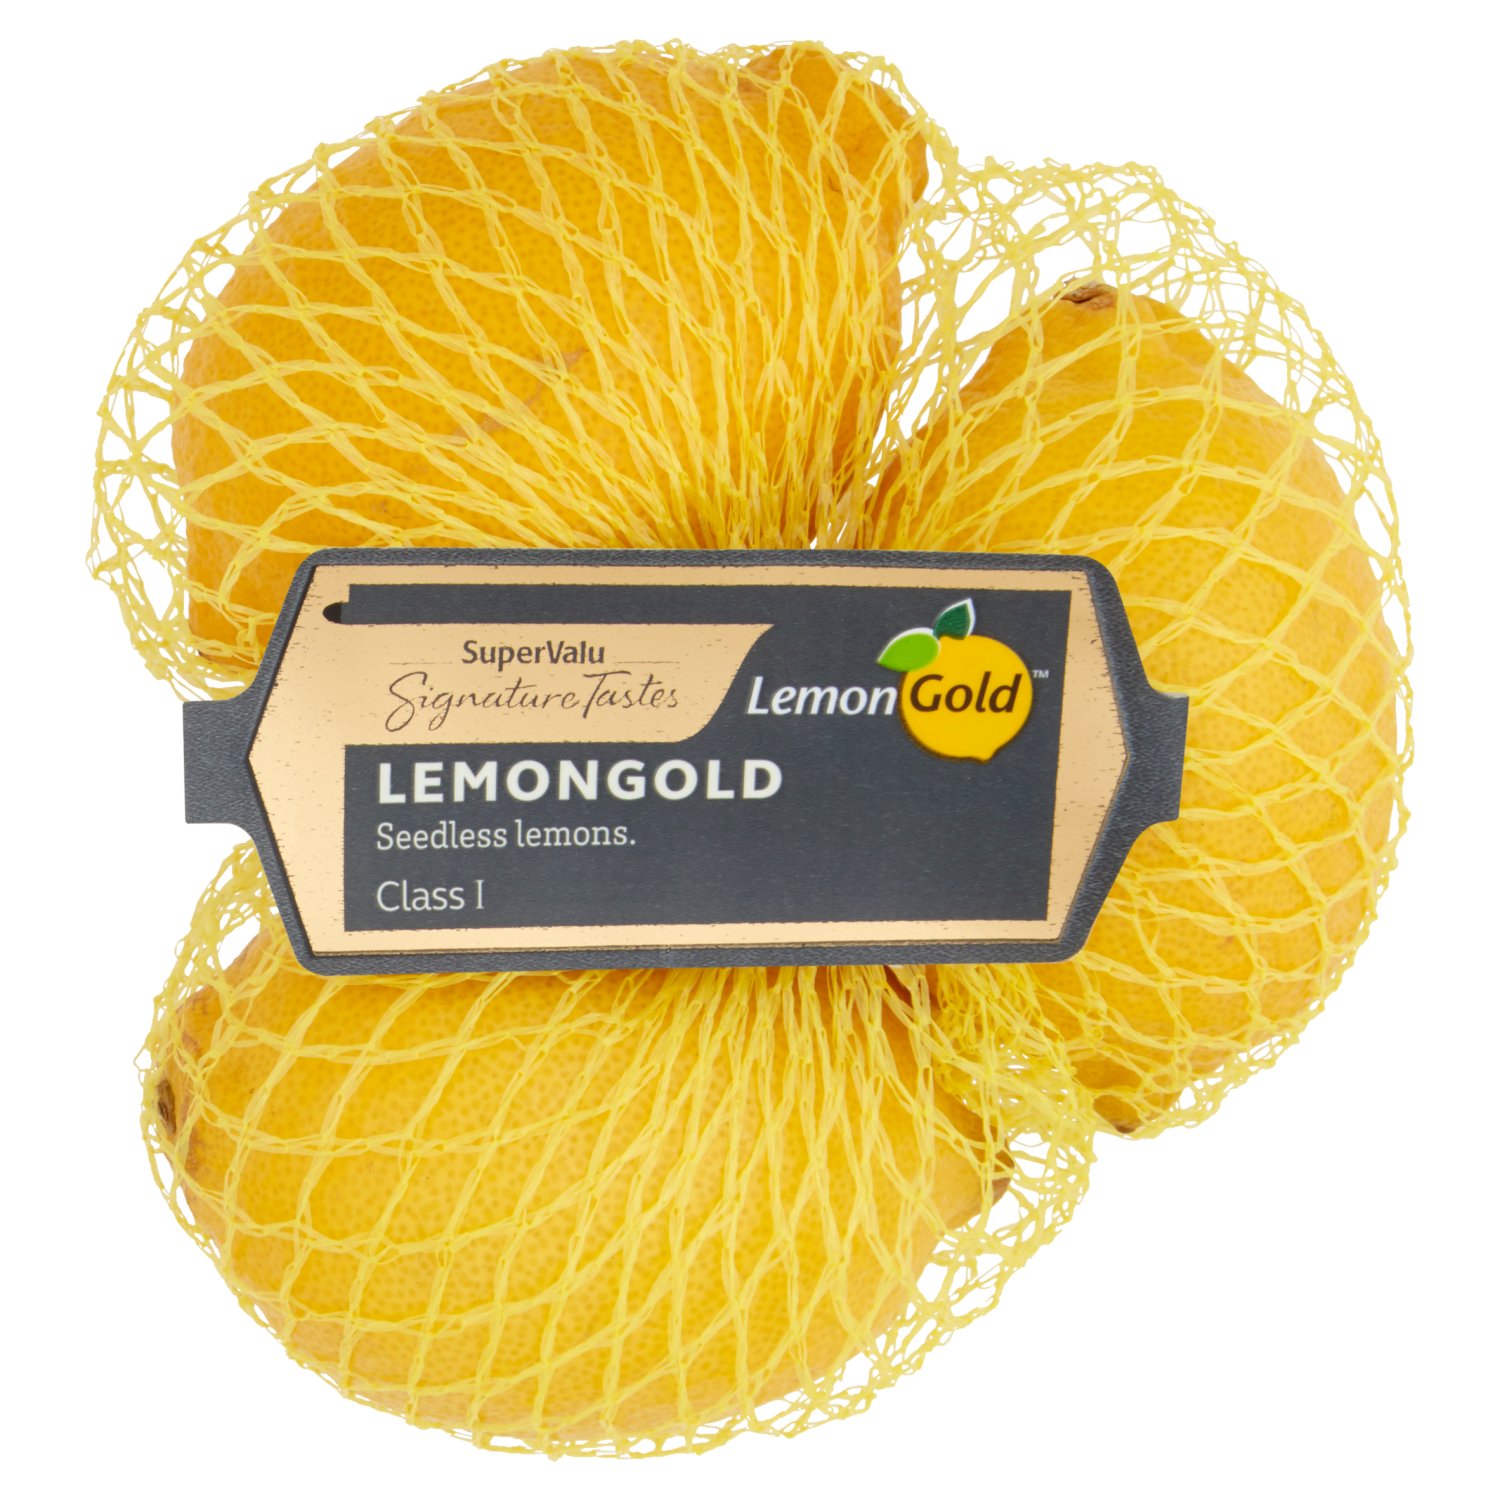 Signature Tastes Seedless LemonGold Lemons (3 Piece)